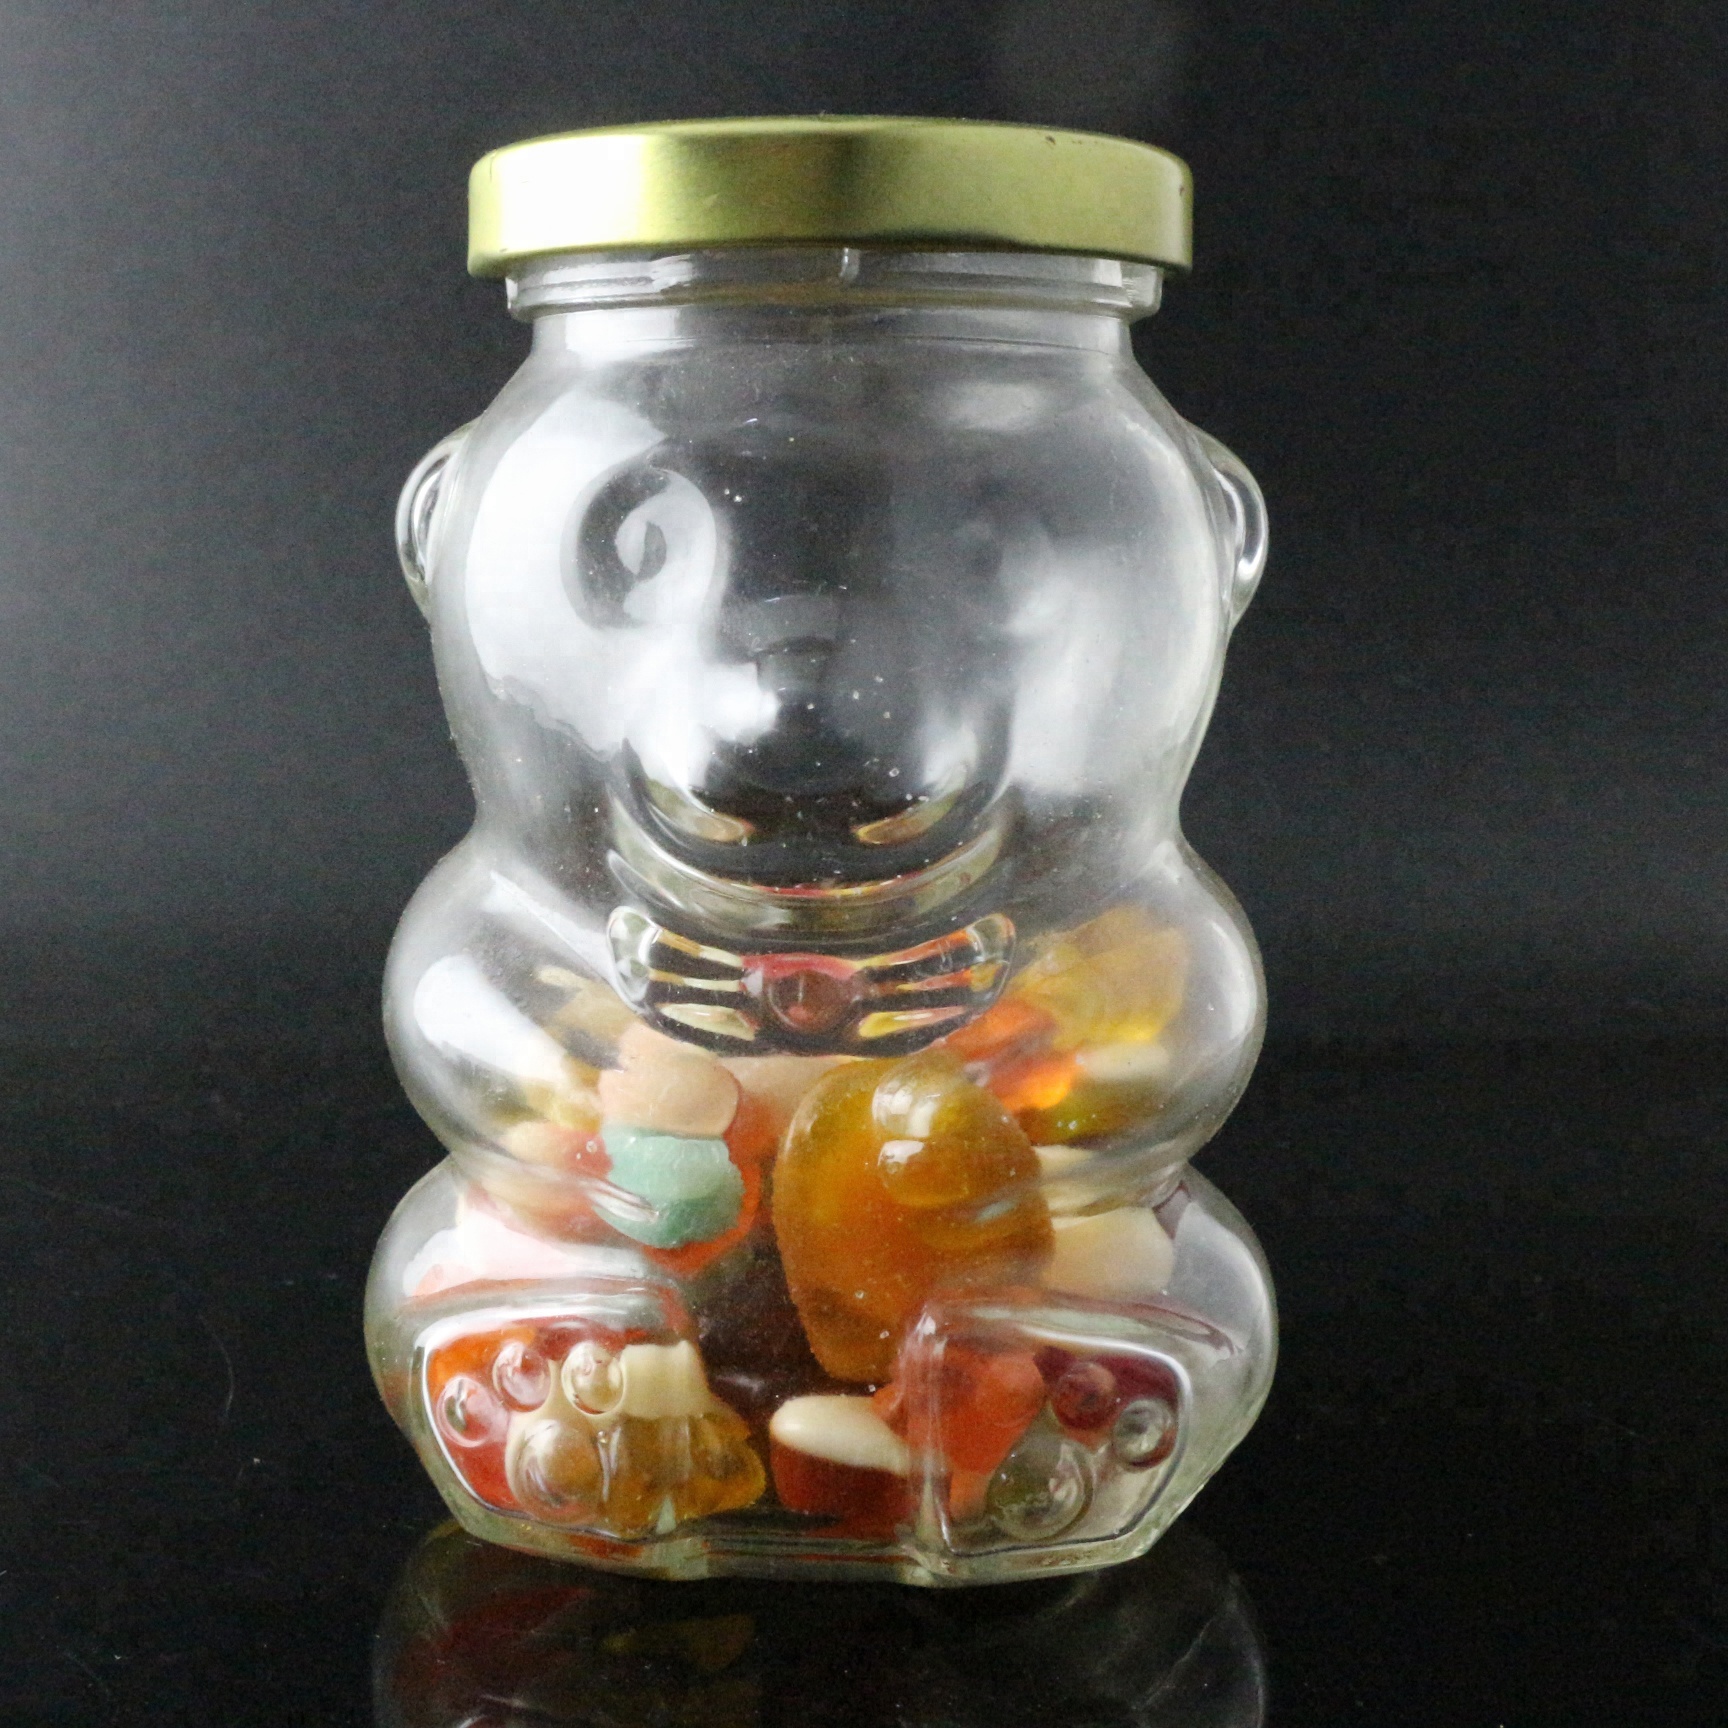 9 oz Honey Bear Shaped Glass Jar Glass Bottle With Black White Gold Metal Lid